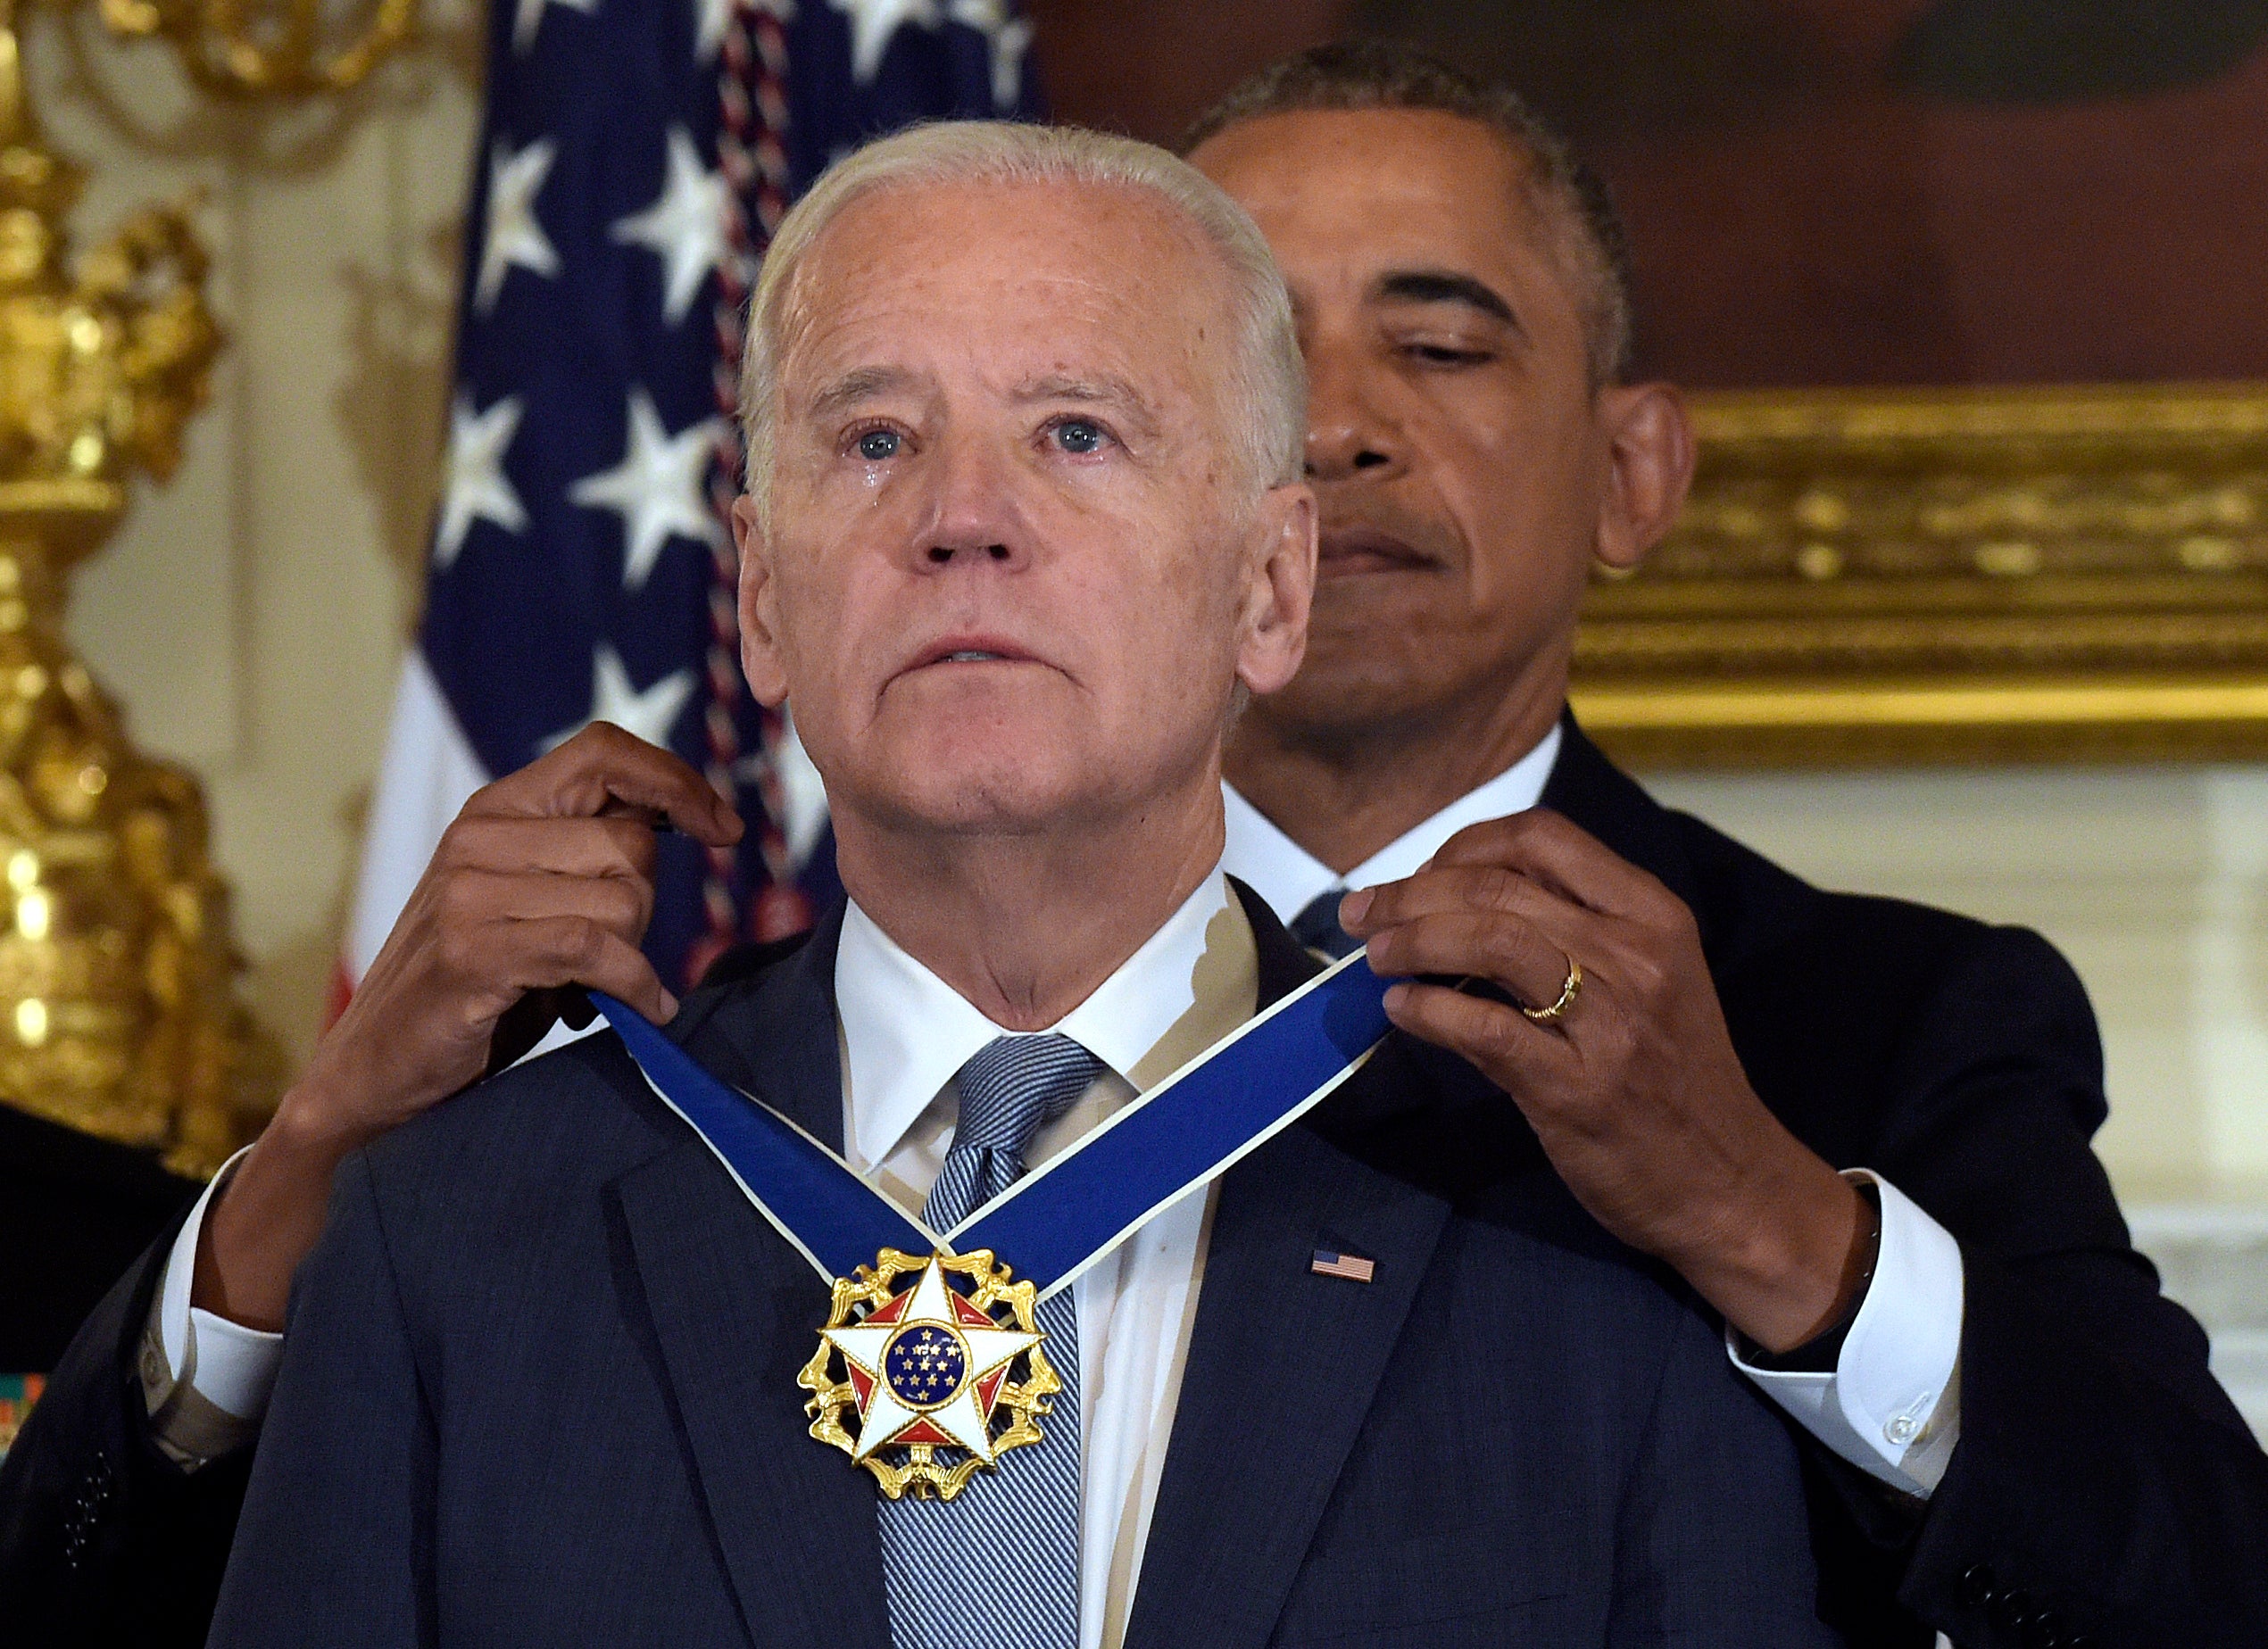 Former President Obama awards the Medal of Freedom to Joe Biden.